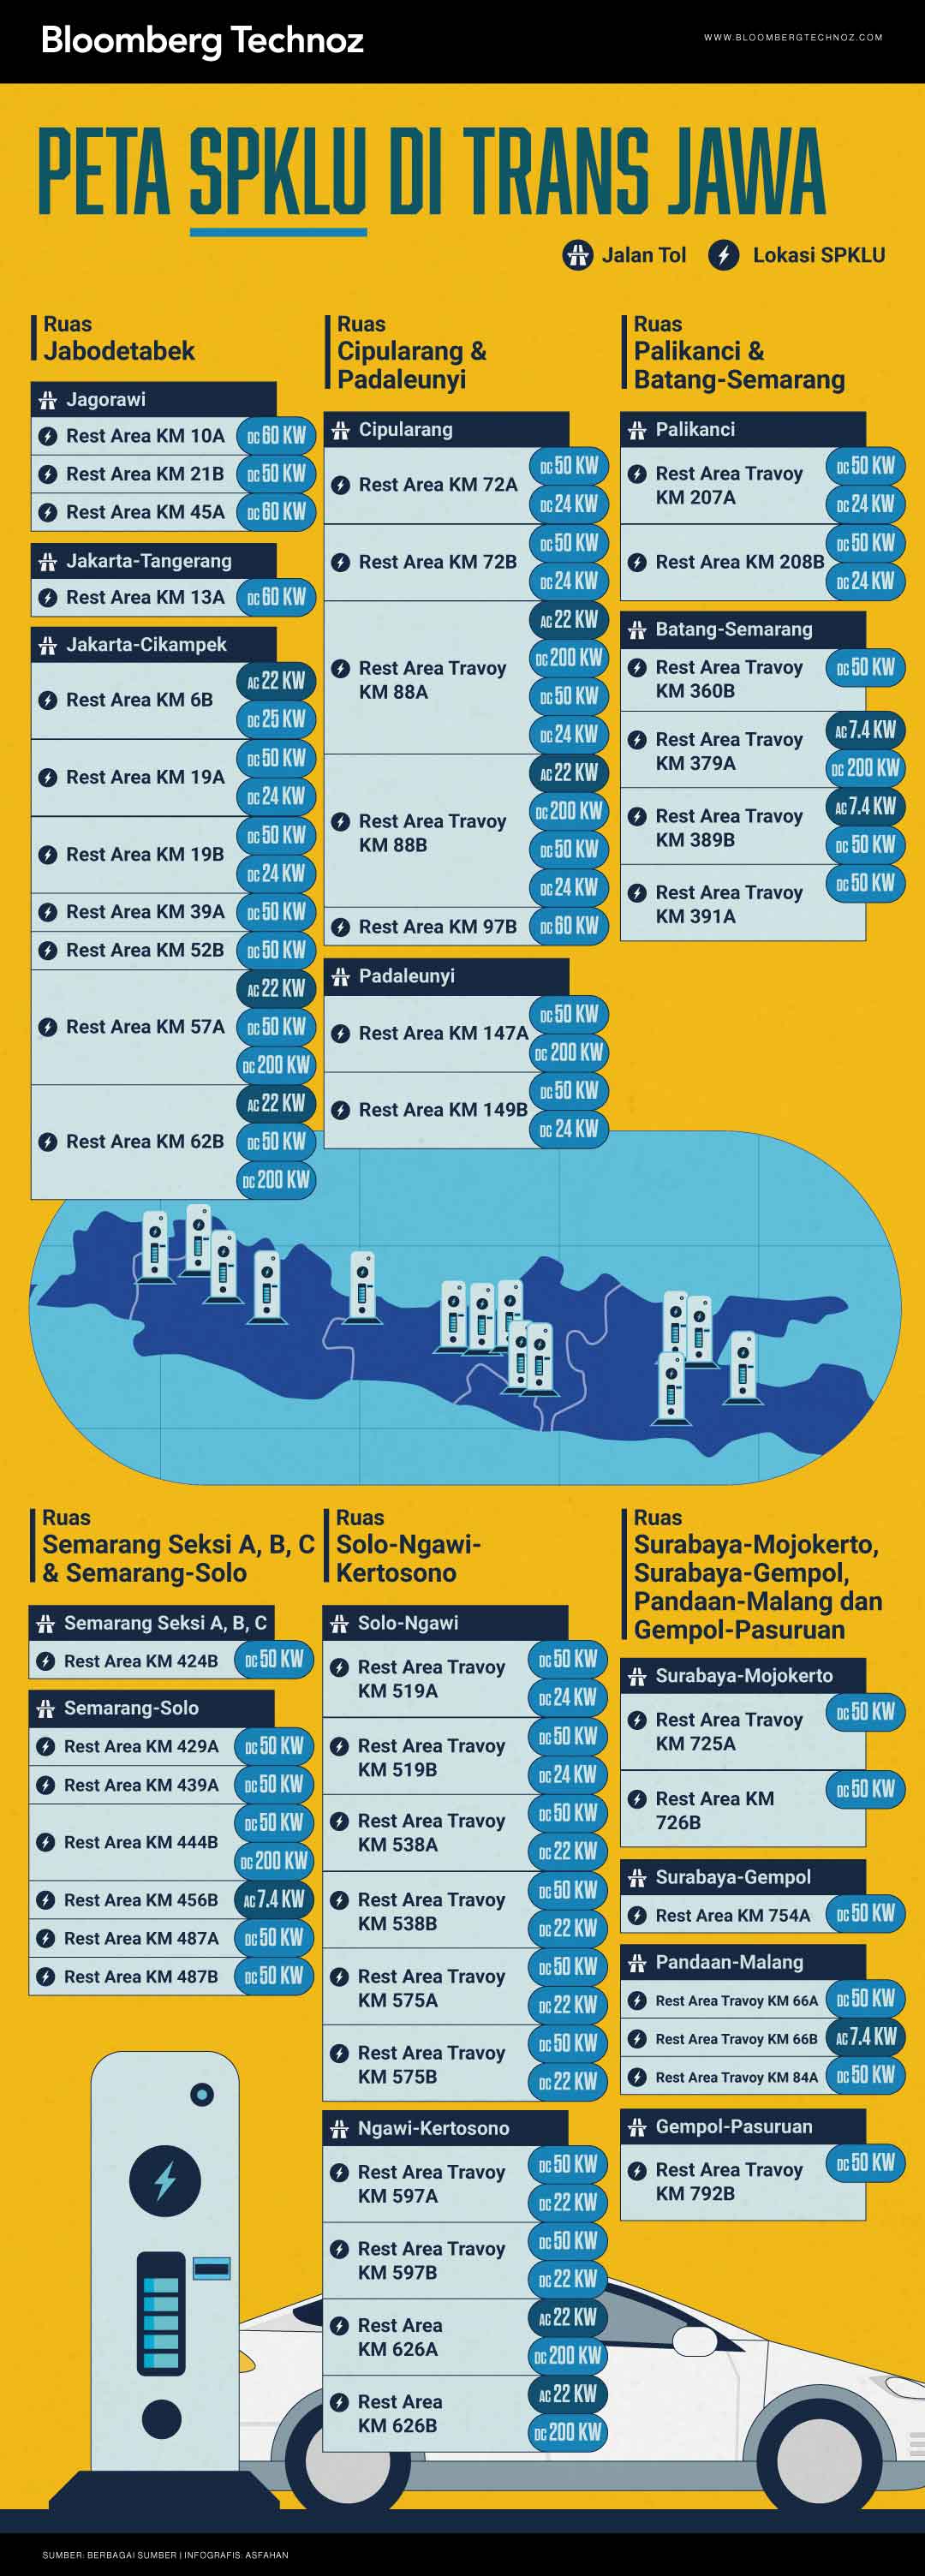 Infografis Peta SPKLU di Trans Jawa (Bloomberg Technoz/Asfahan)